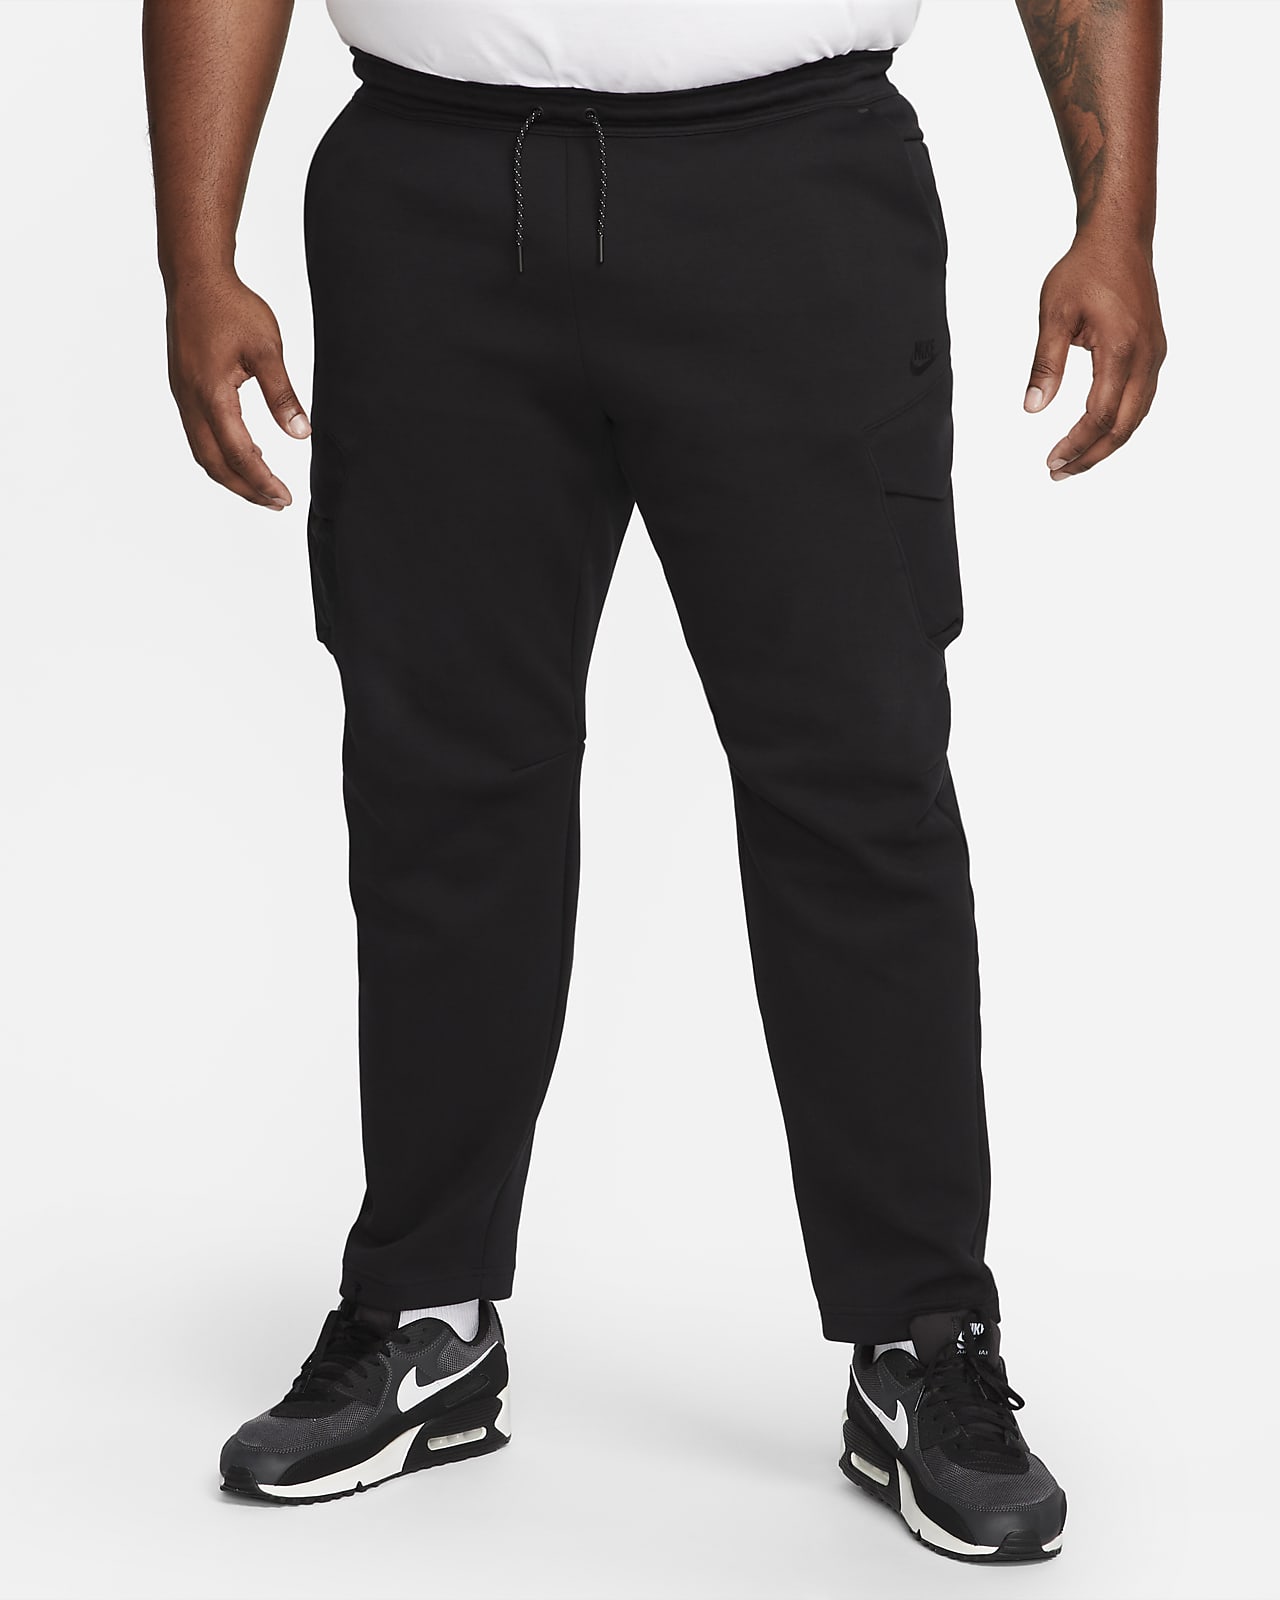 Nike Tech Fleece Utility Pants Size 3XL Black Tracksuit Sweatpants  DM6453-010